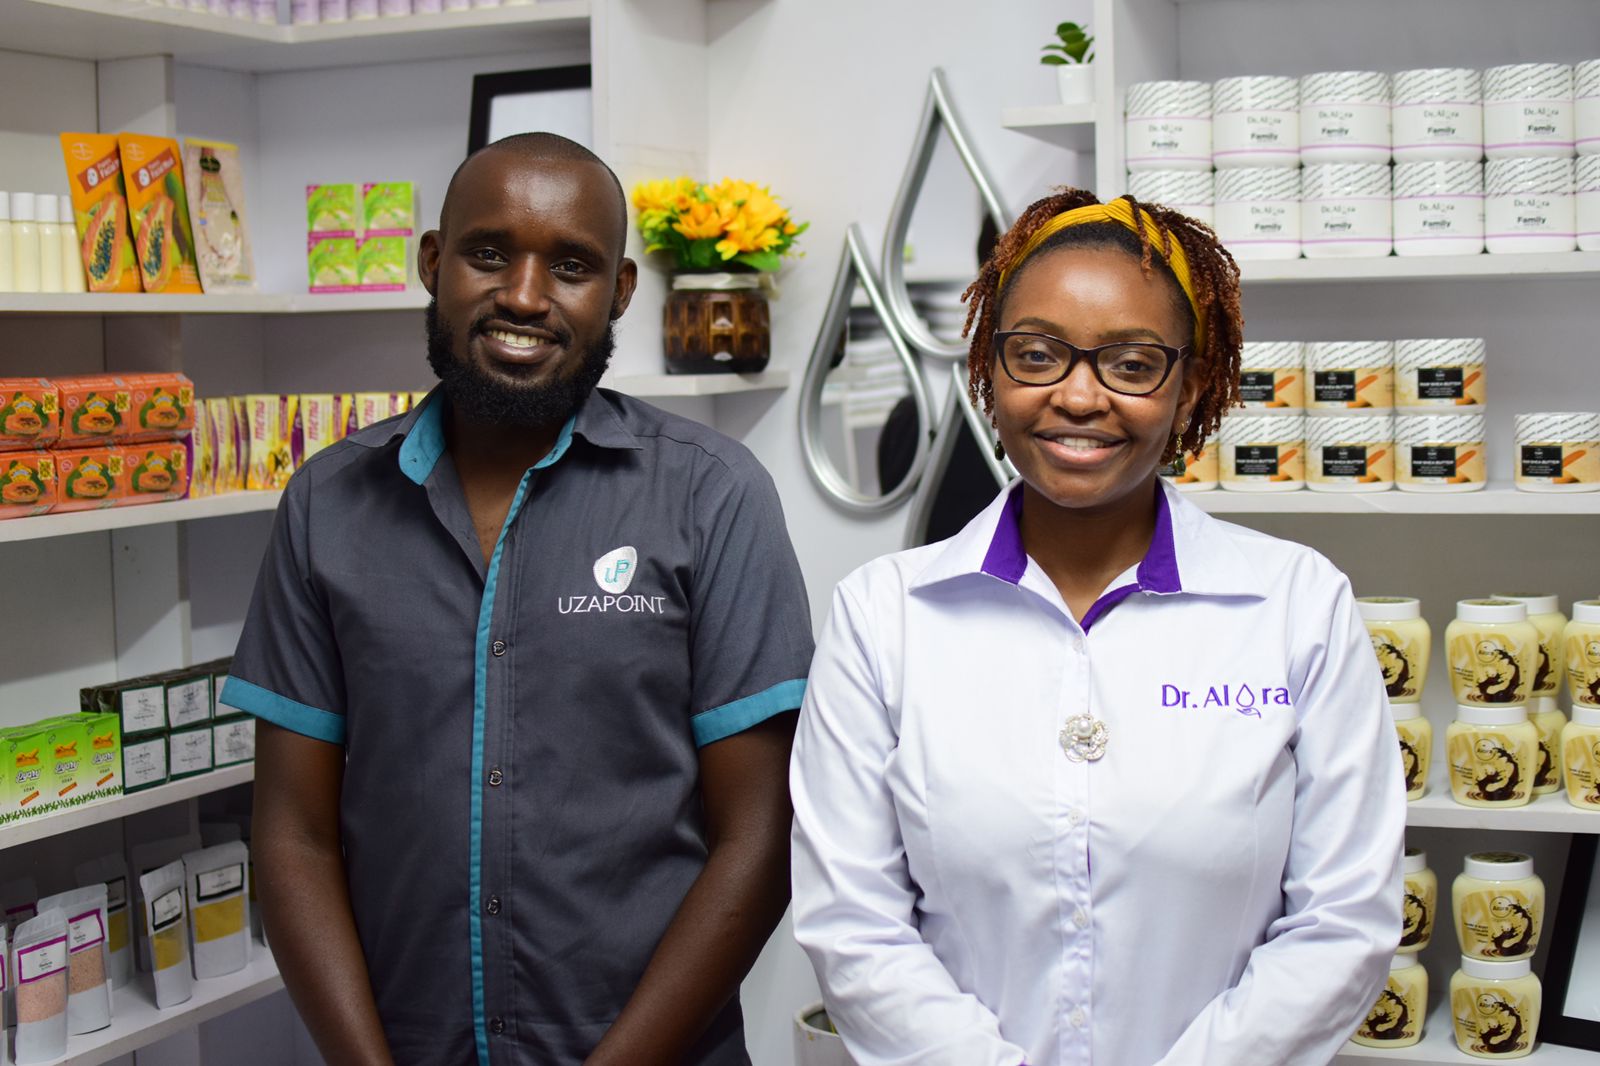 Uzapoint|Dr. Laura Munyazi Mwangi - Director, Alora Products